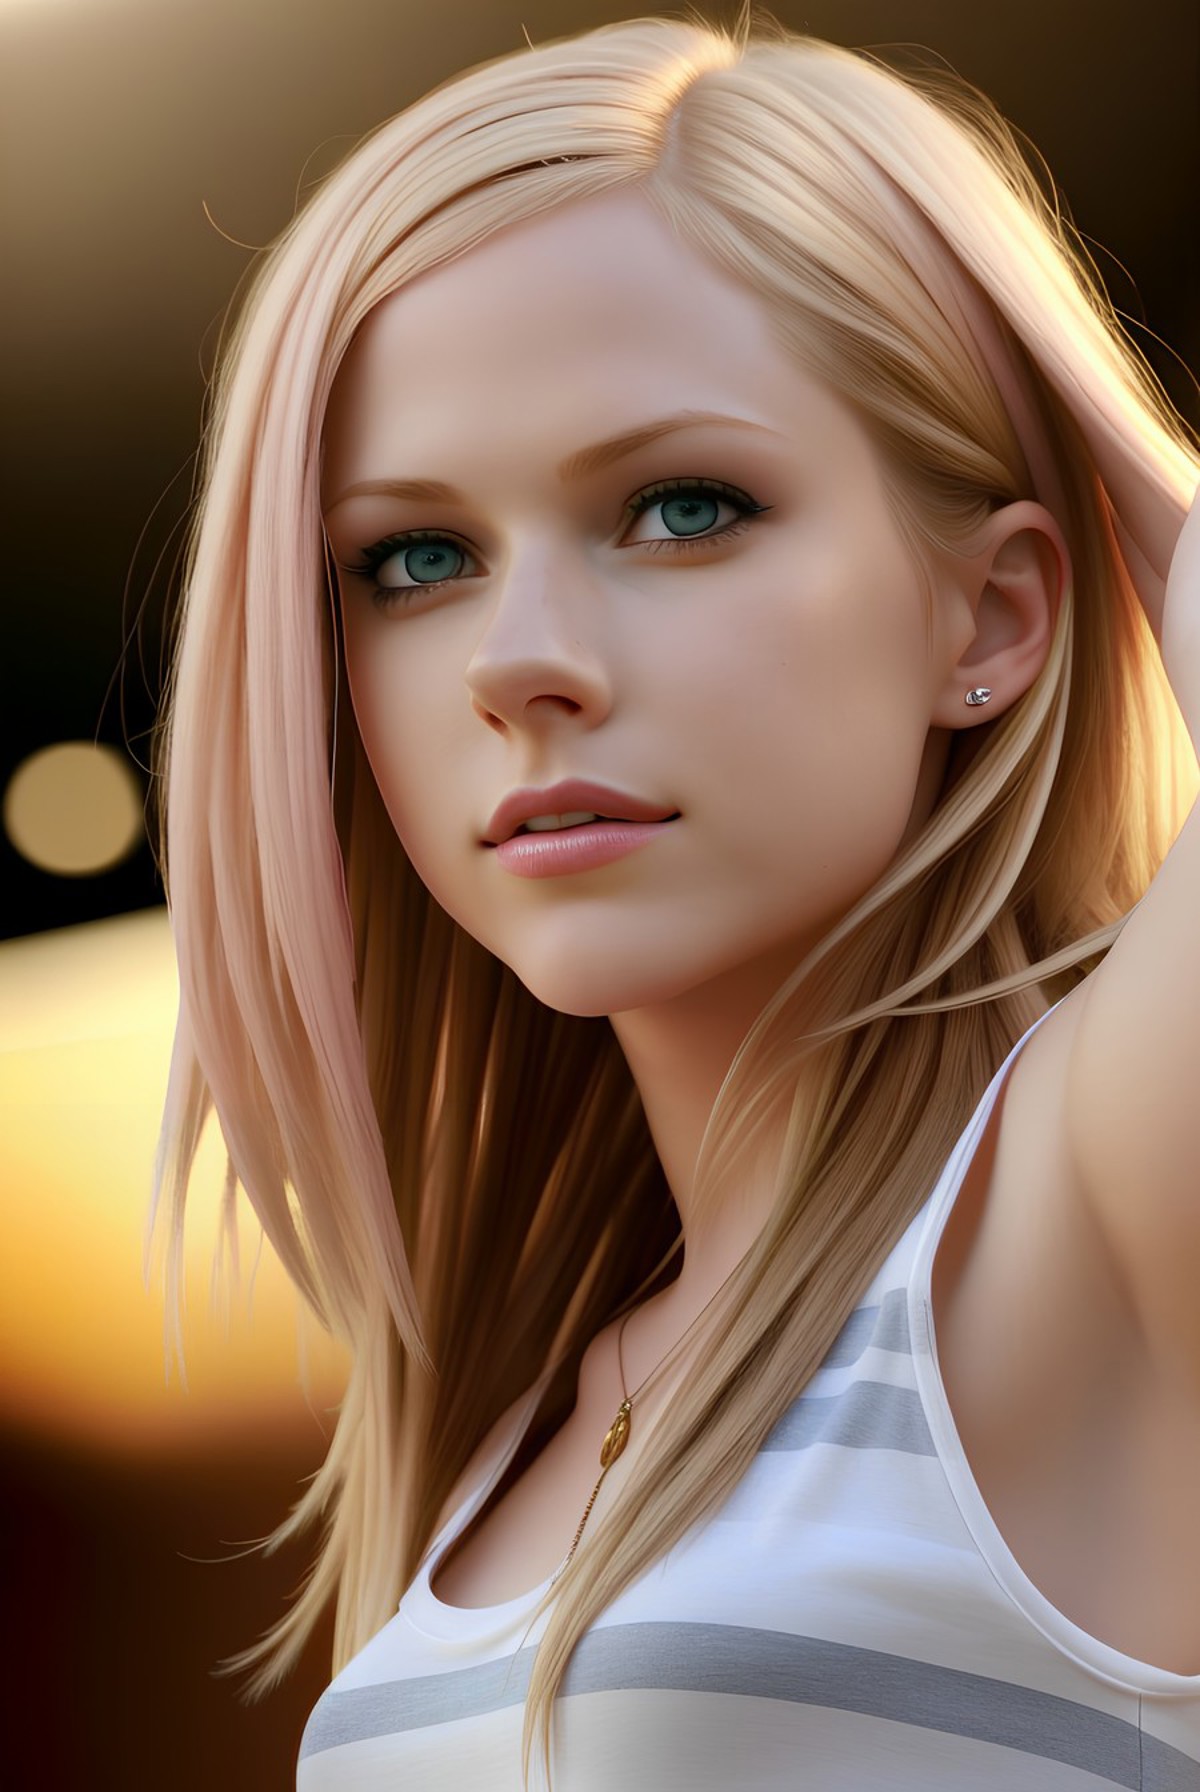 Avril Lavigne - Embedding image by MzMaXaM